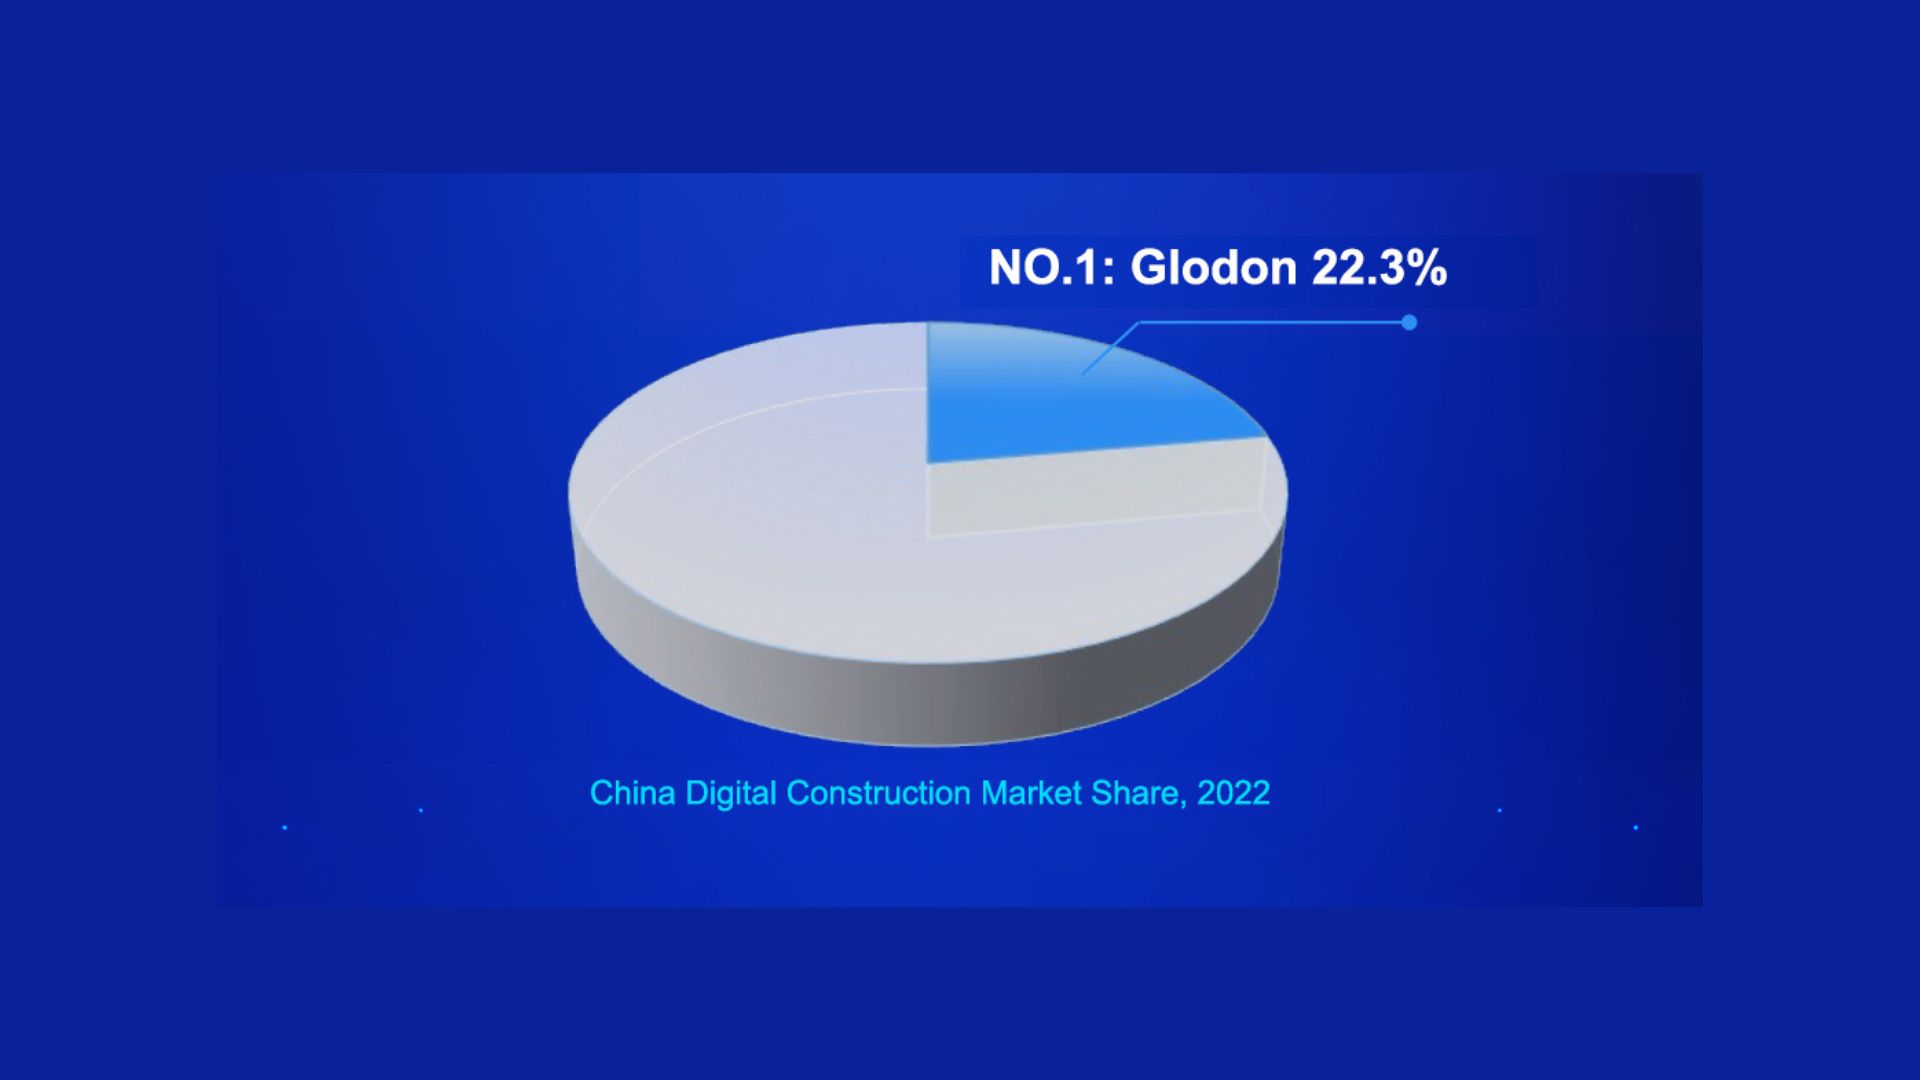 IDC: Glodon Leads China Digital Construction Market in 2022